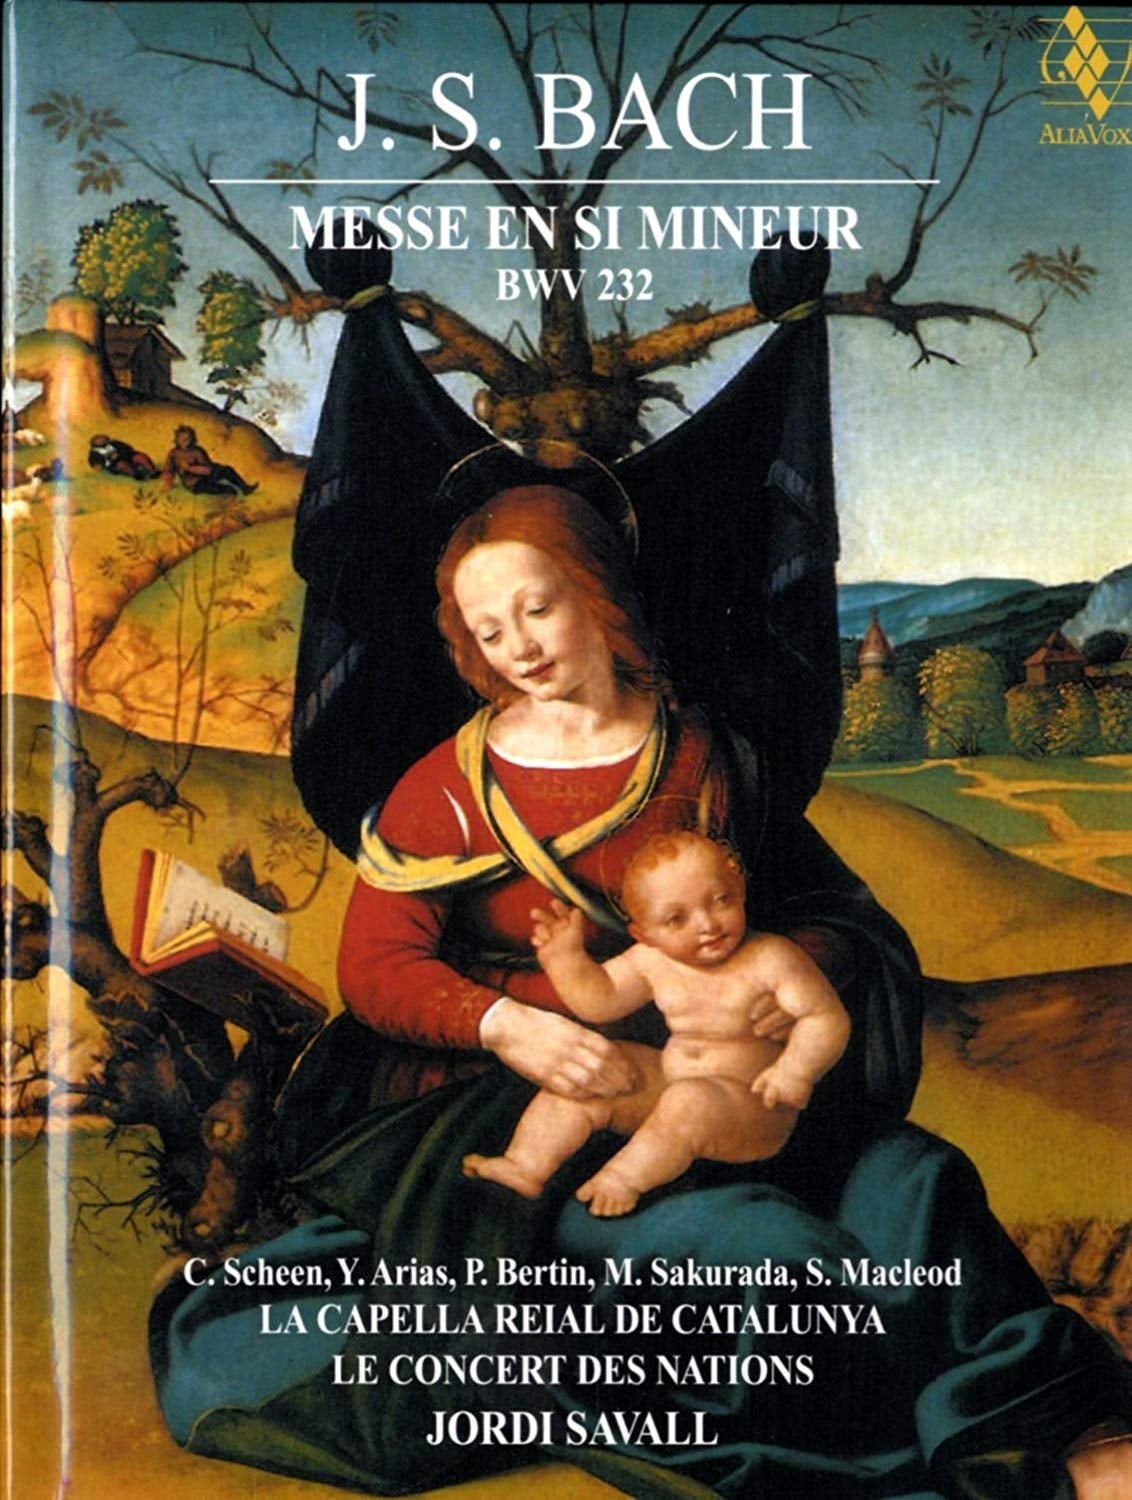 J. S. Bach's Mass in B minor - BWV 232